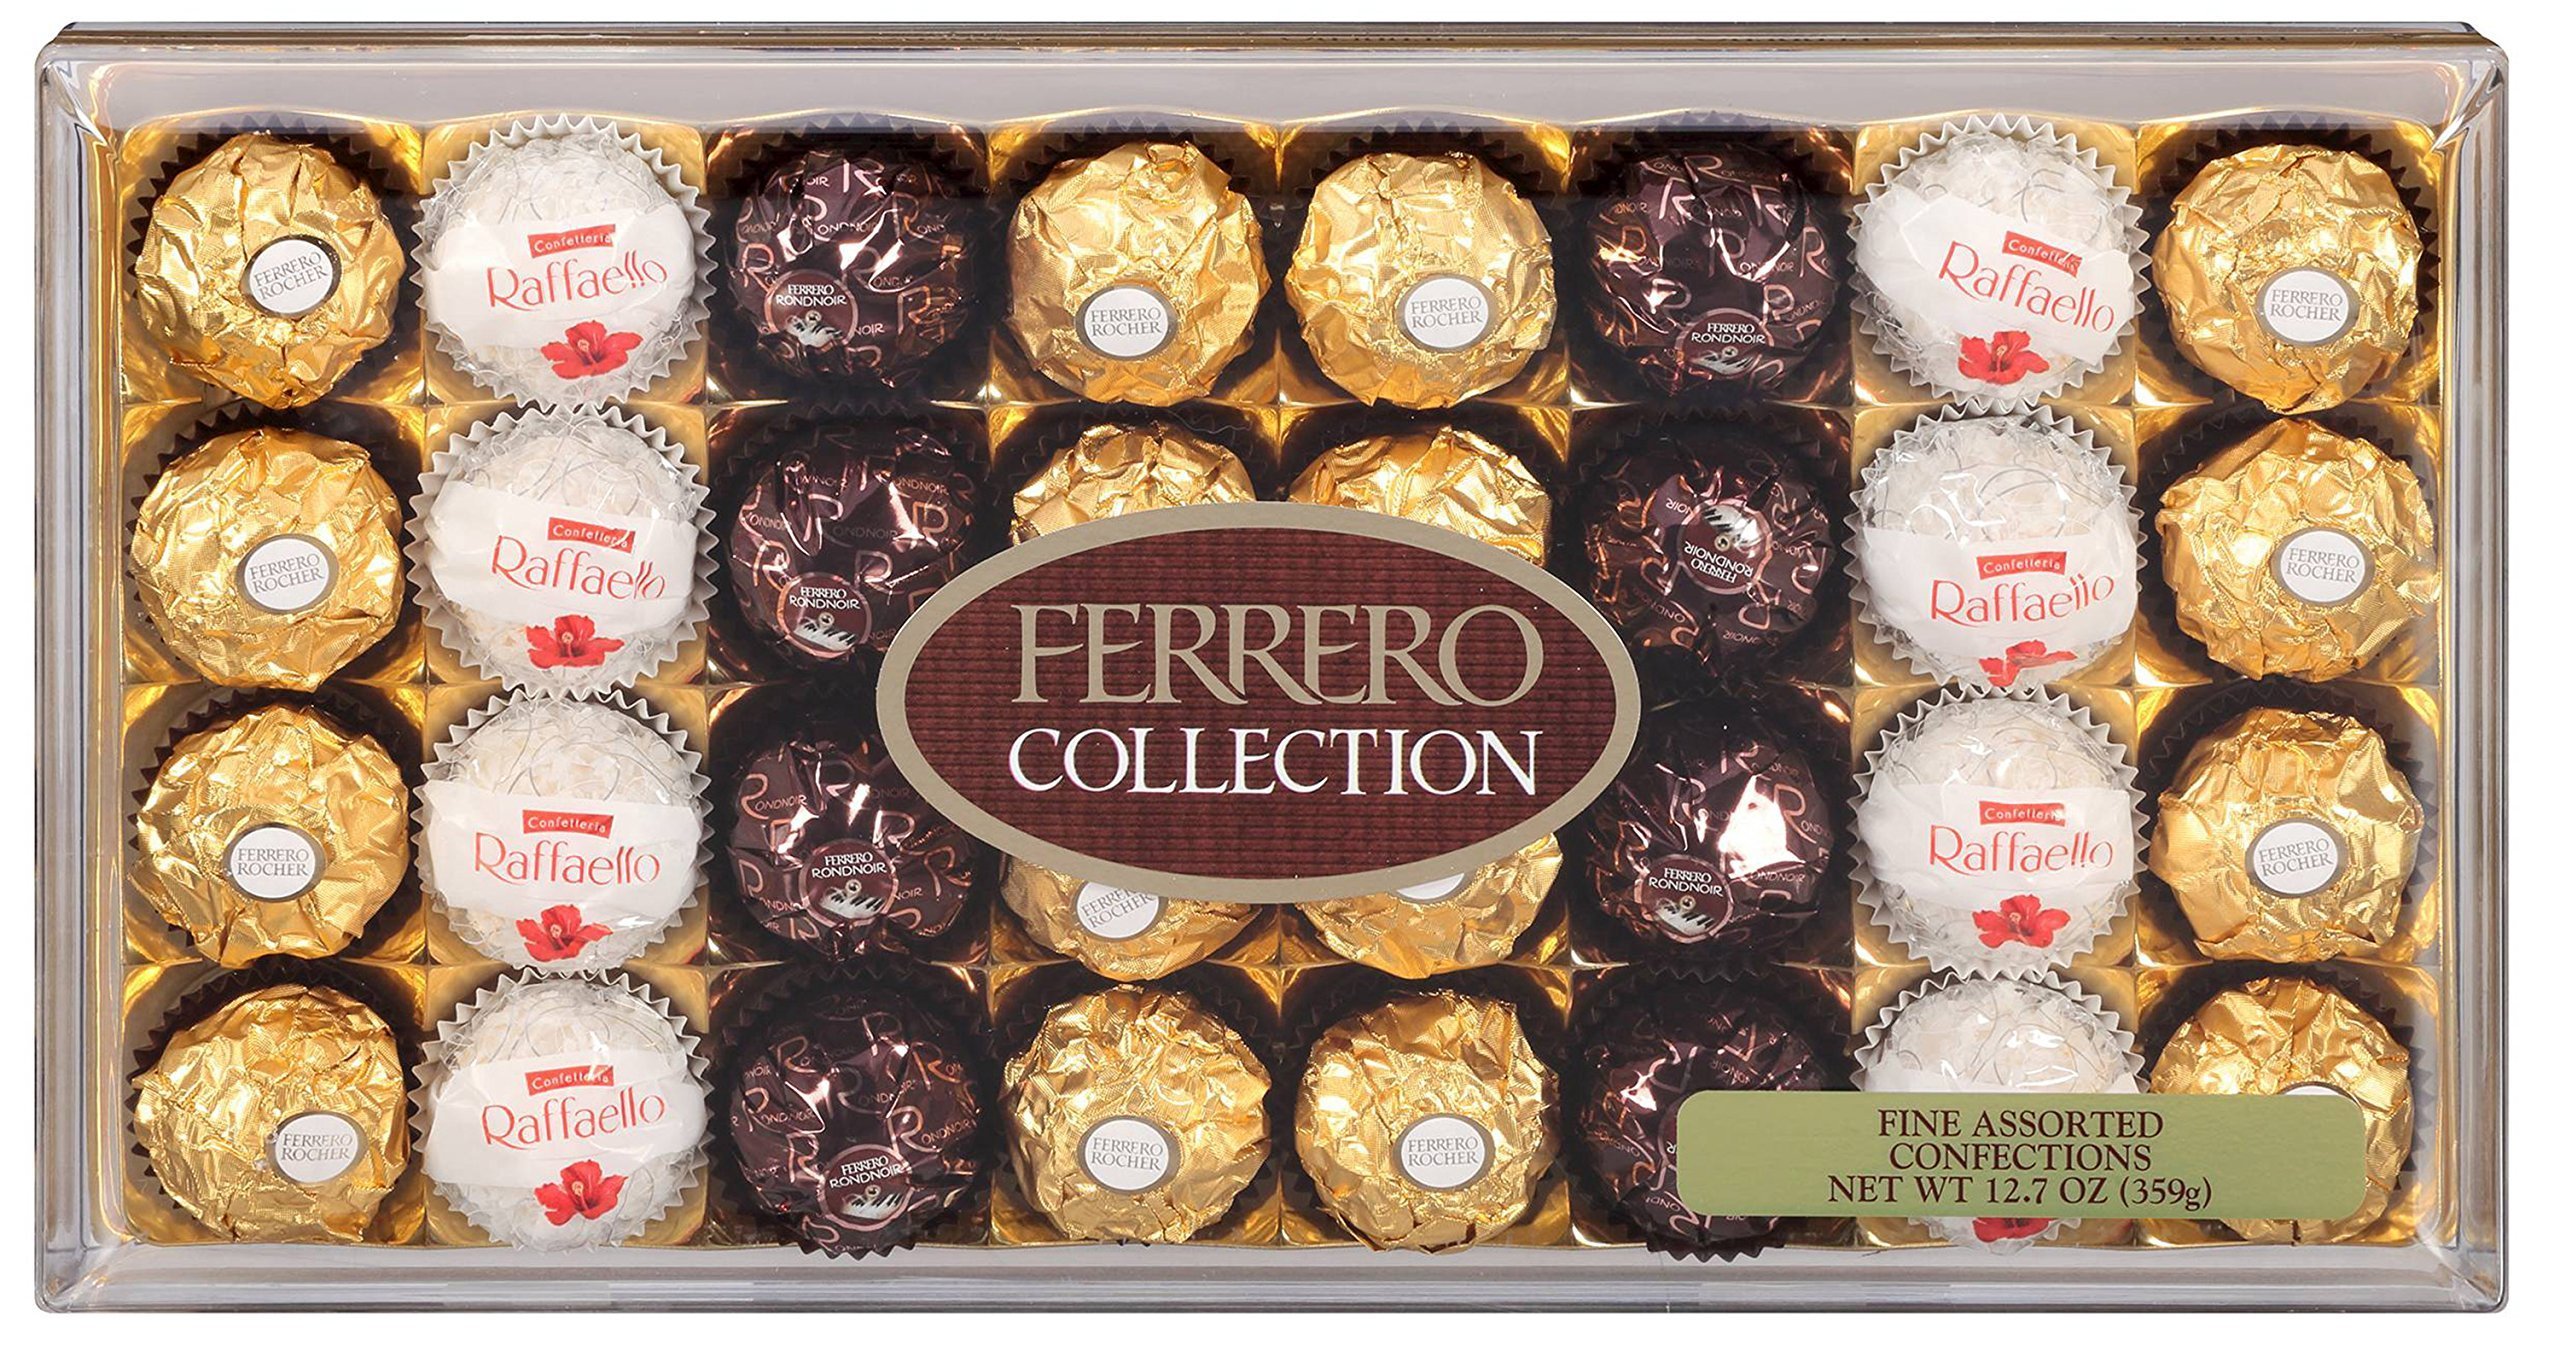 Th collection. Коллекция Ферреро т32. Ферреро Роше коллекшн. Ferrero Rocher collection, 359.2. Ферреро коллекция 359.2г.